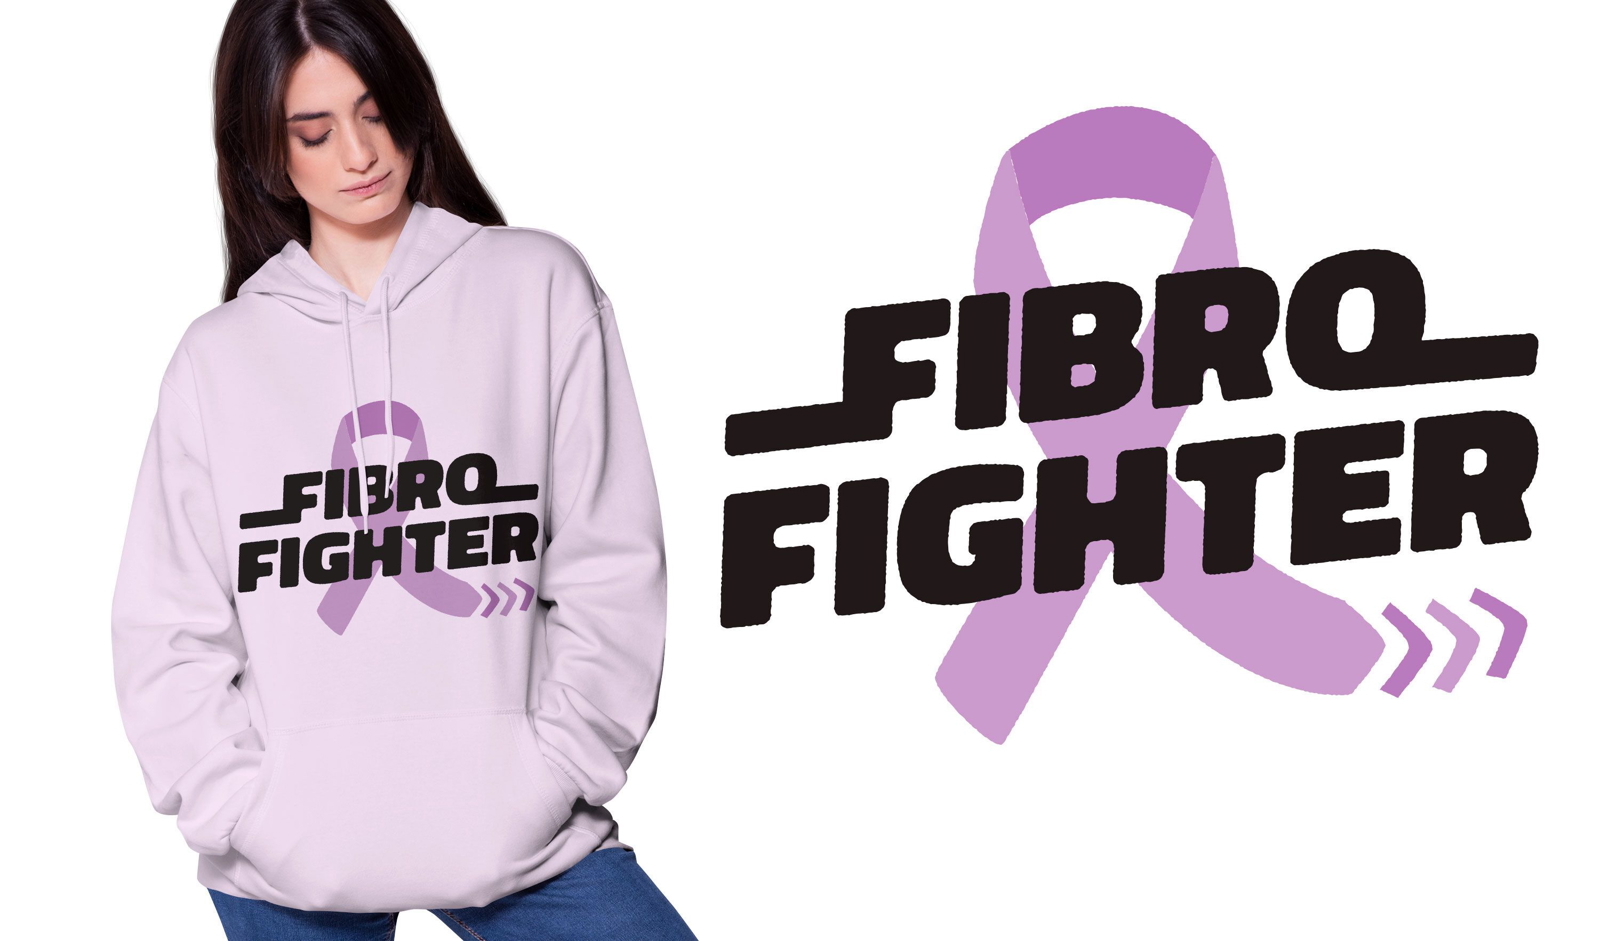 Fibro fighter t-shirt design